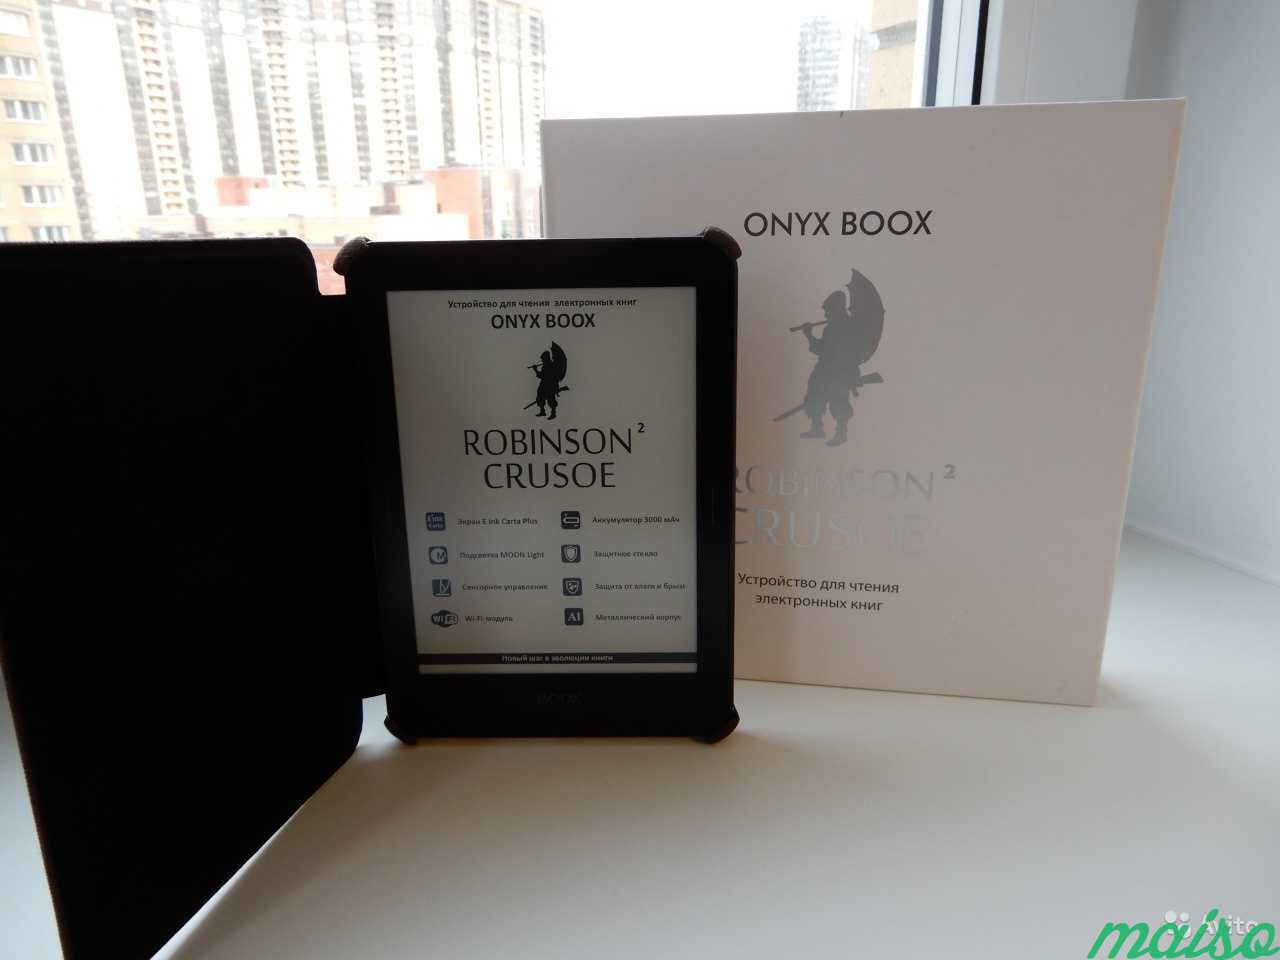 Onyx BOOX i63 v1.1. Фоны для чтения электронных книг. Книга Робинзон Крузо от Onyx. Onyx BOOX Leaf 2 тень справа.